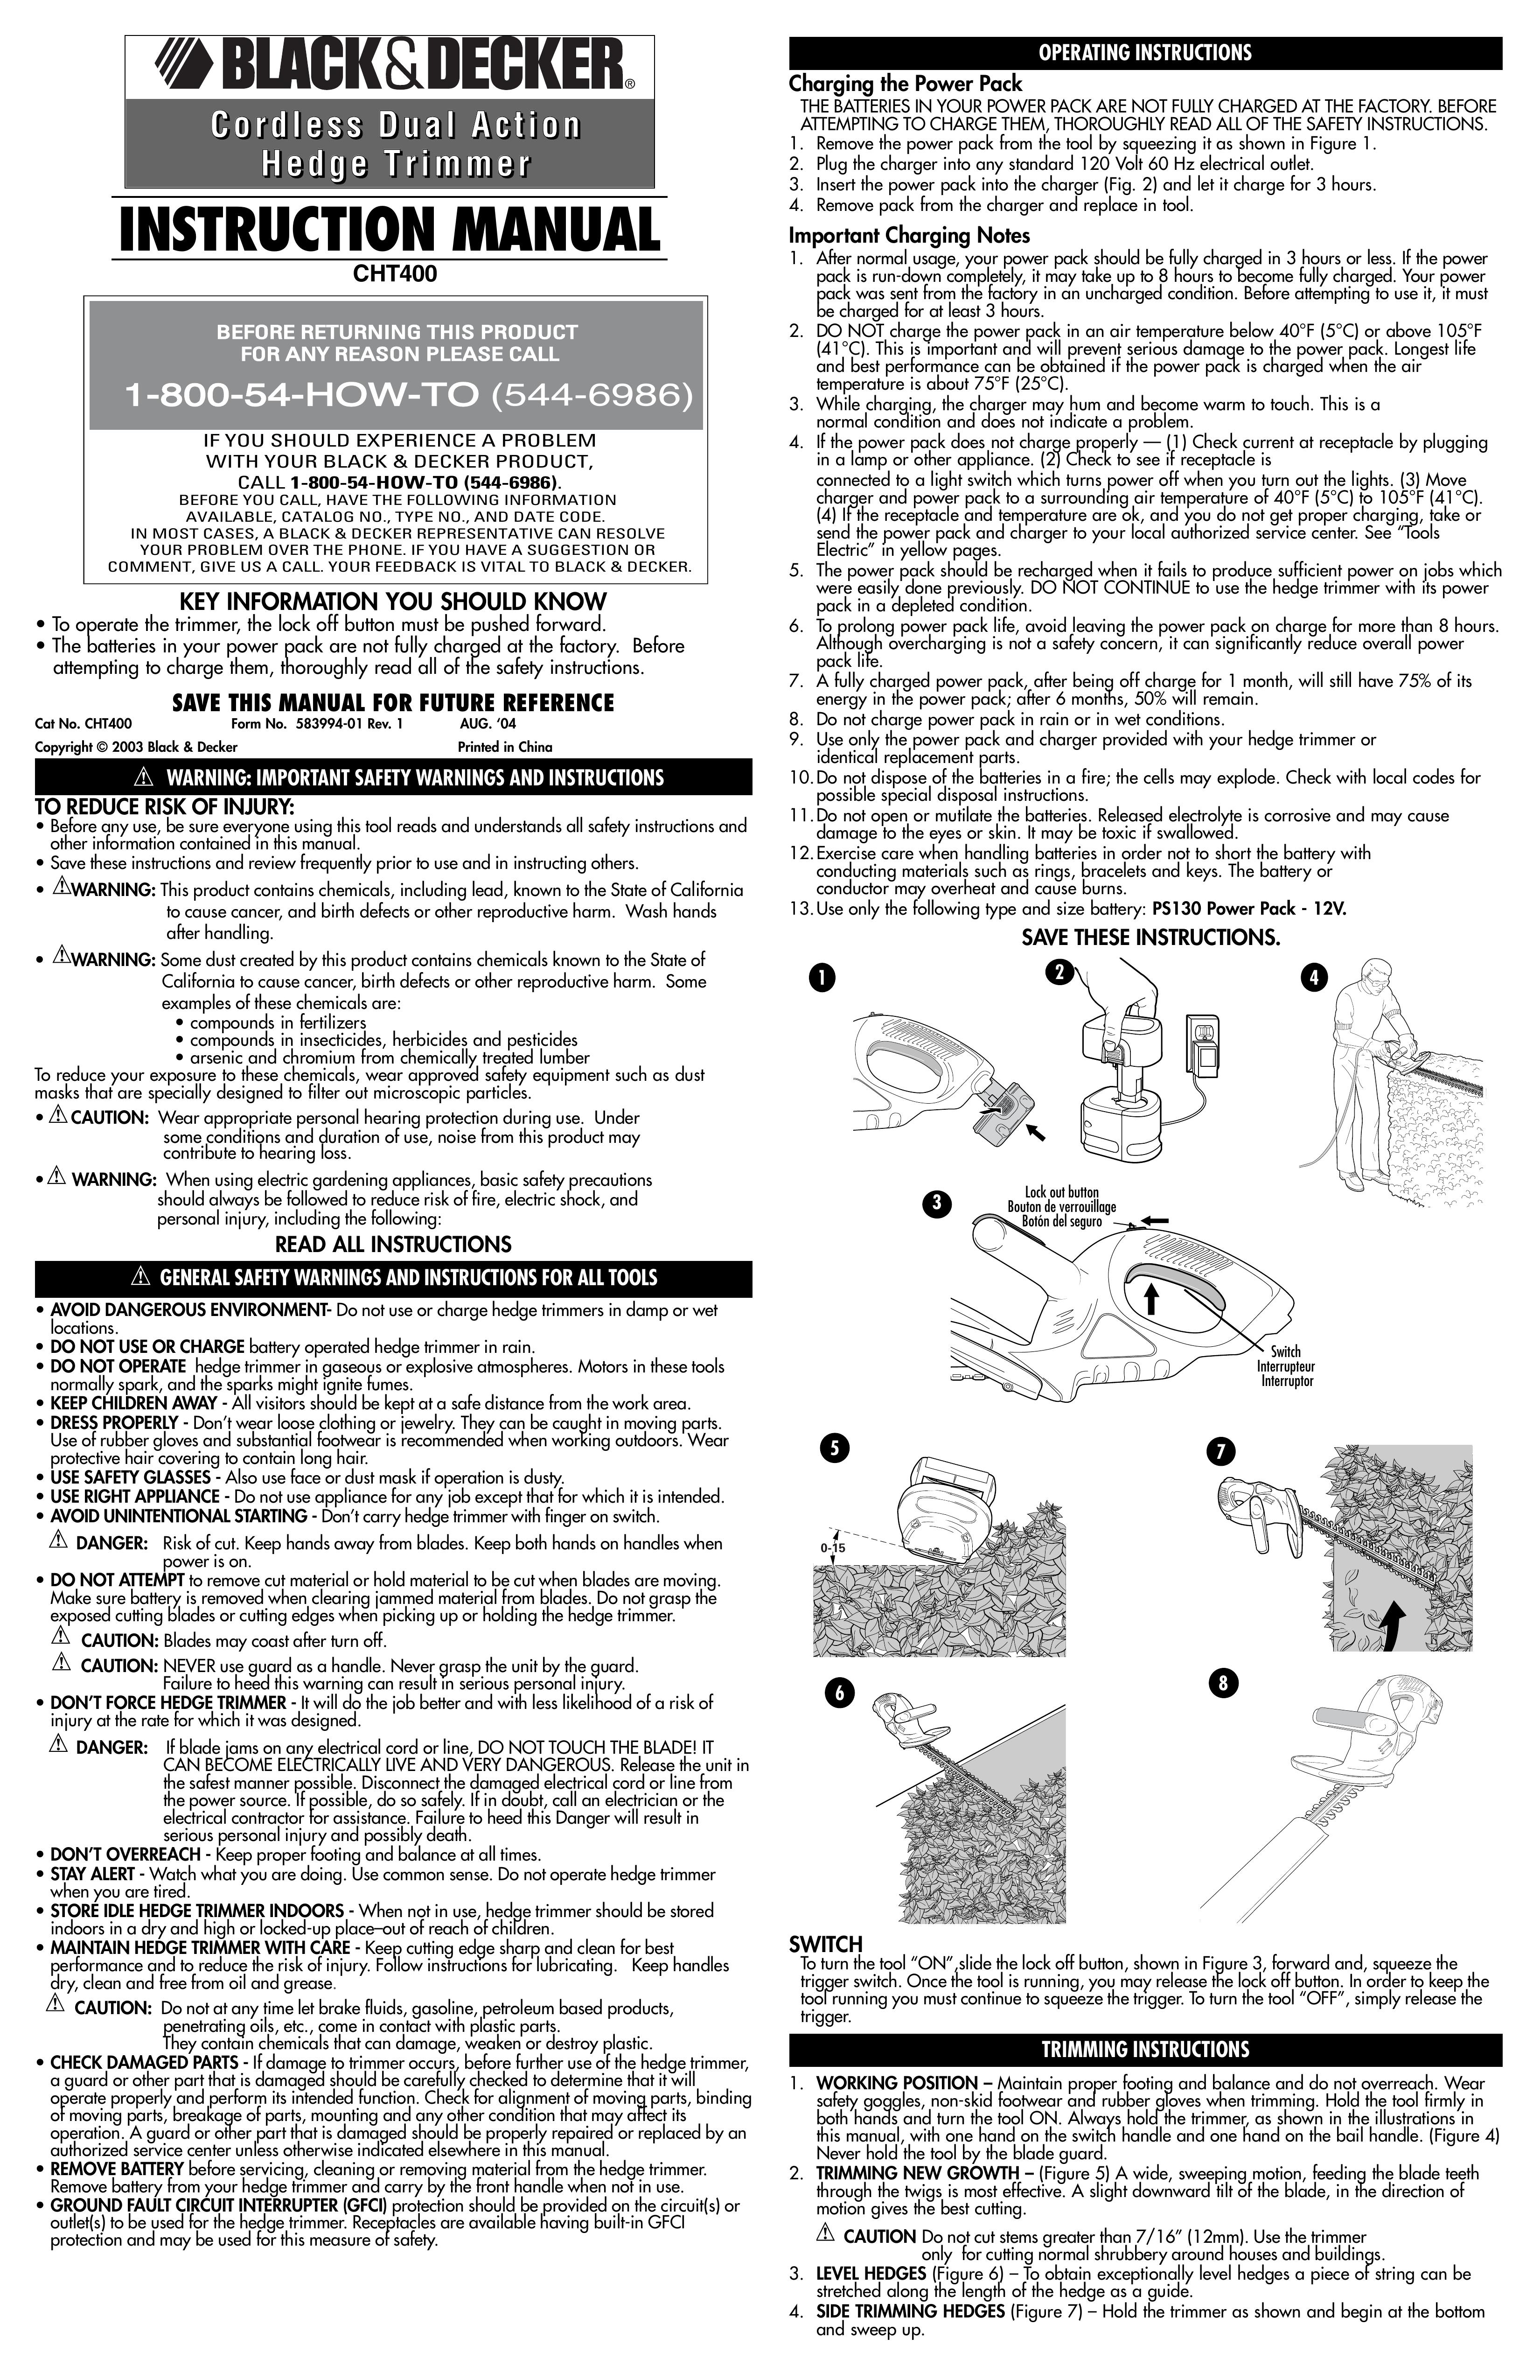 Black & Decker 583994-01 Trimmer User Manual